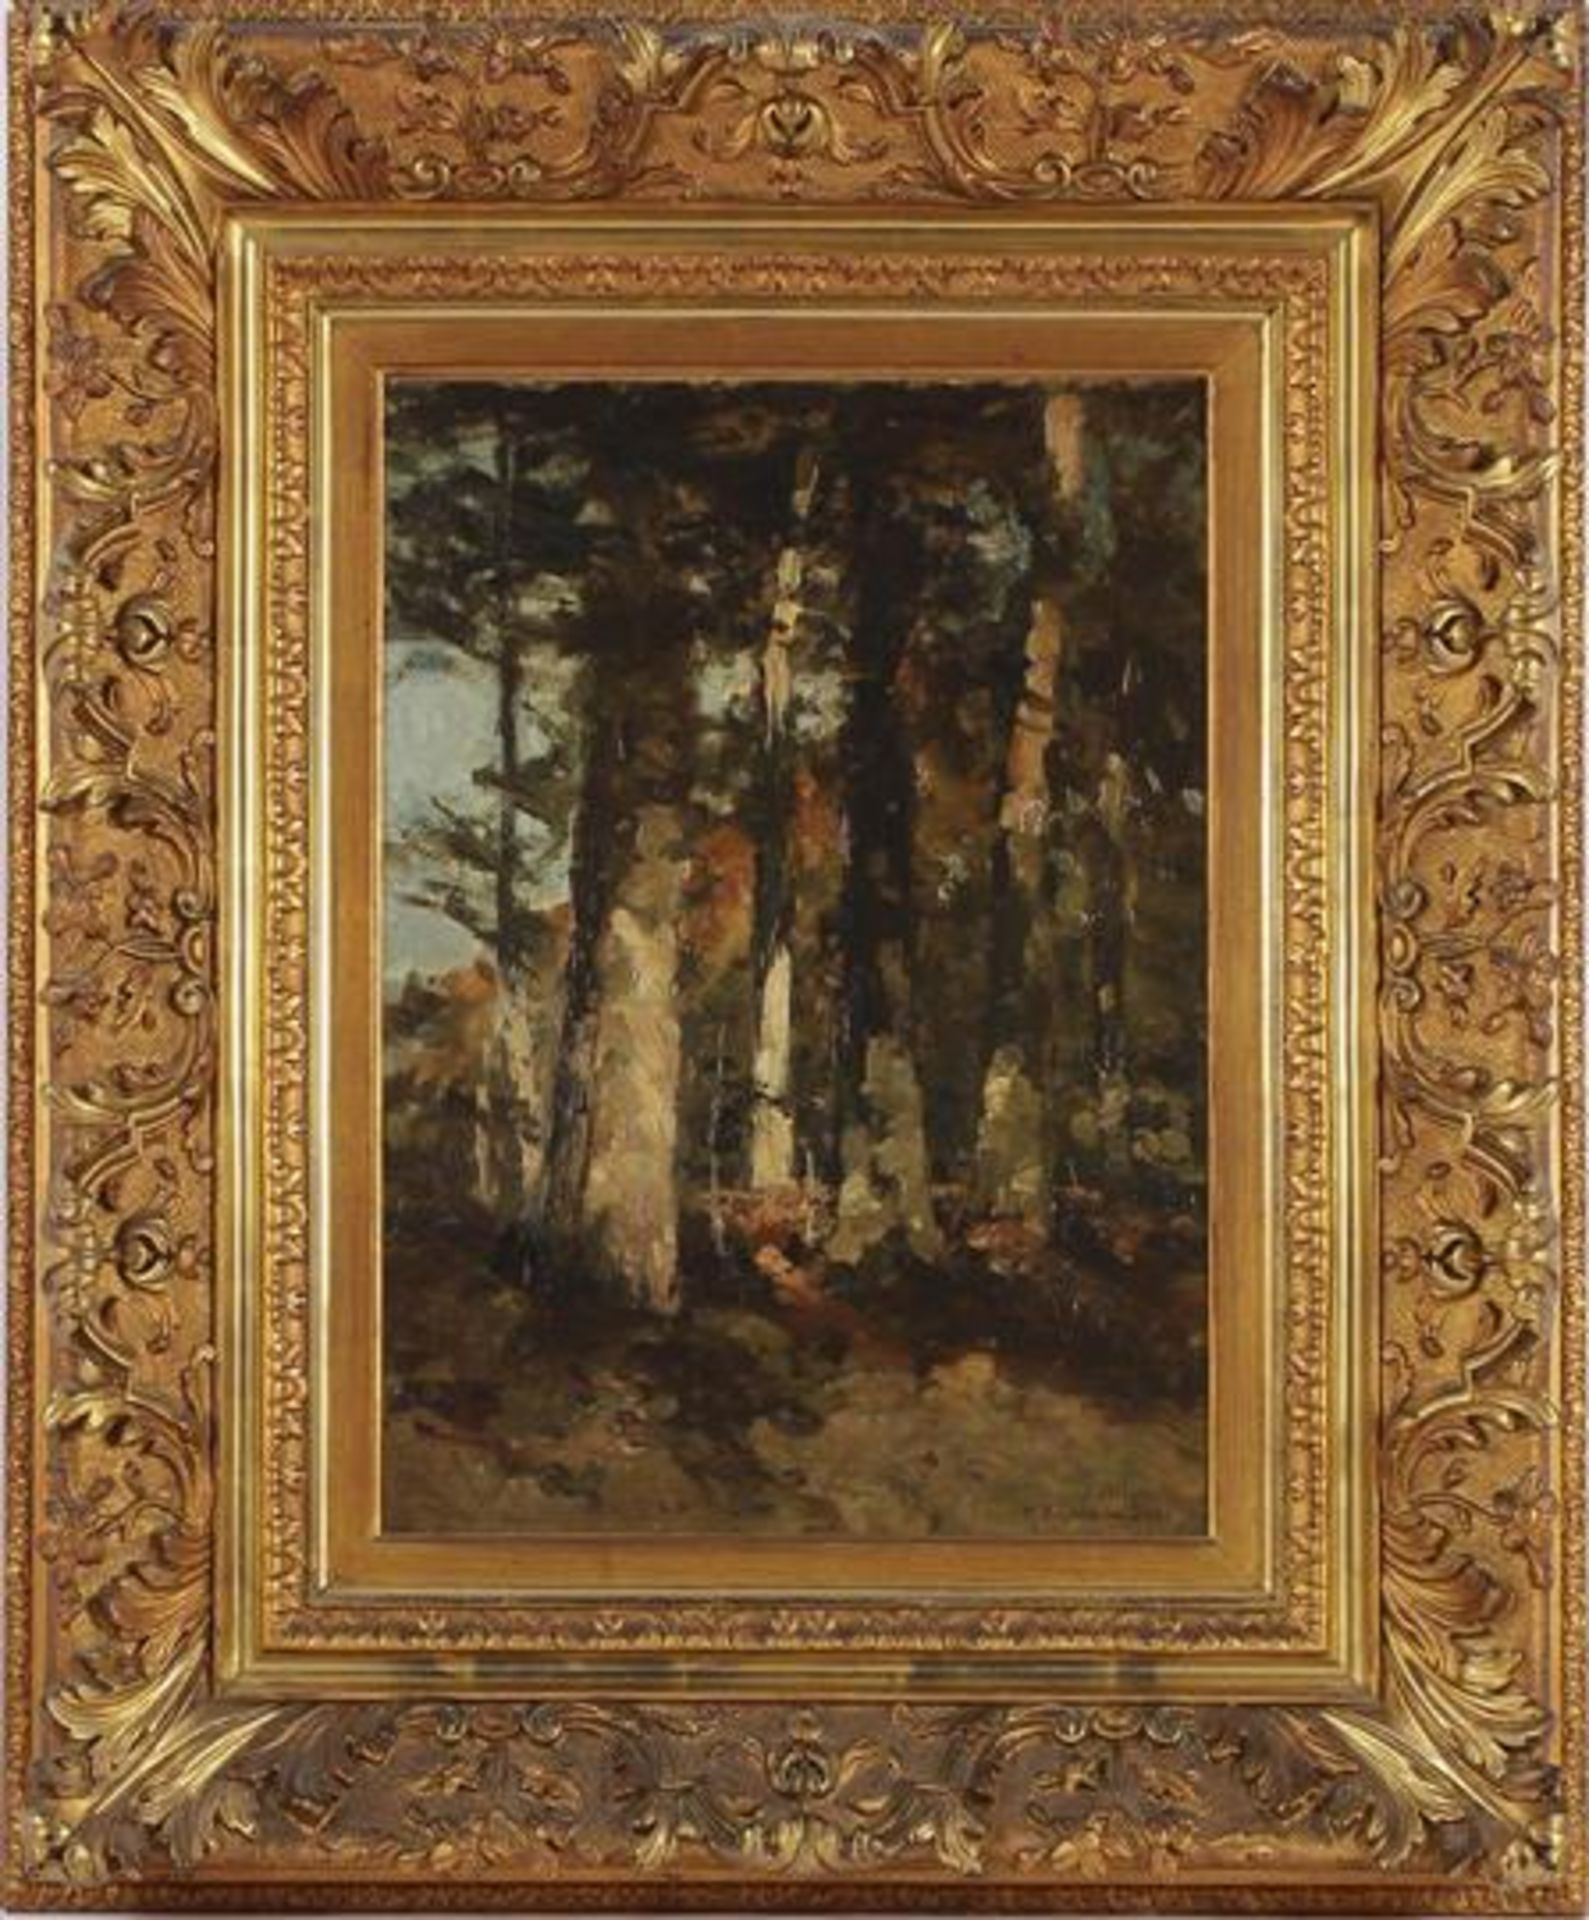 Maria Philippina Bilders van Bosse (1837-1900)